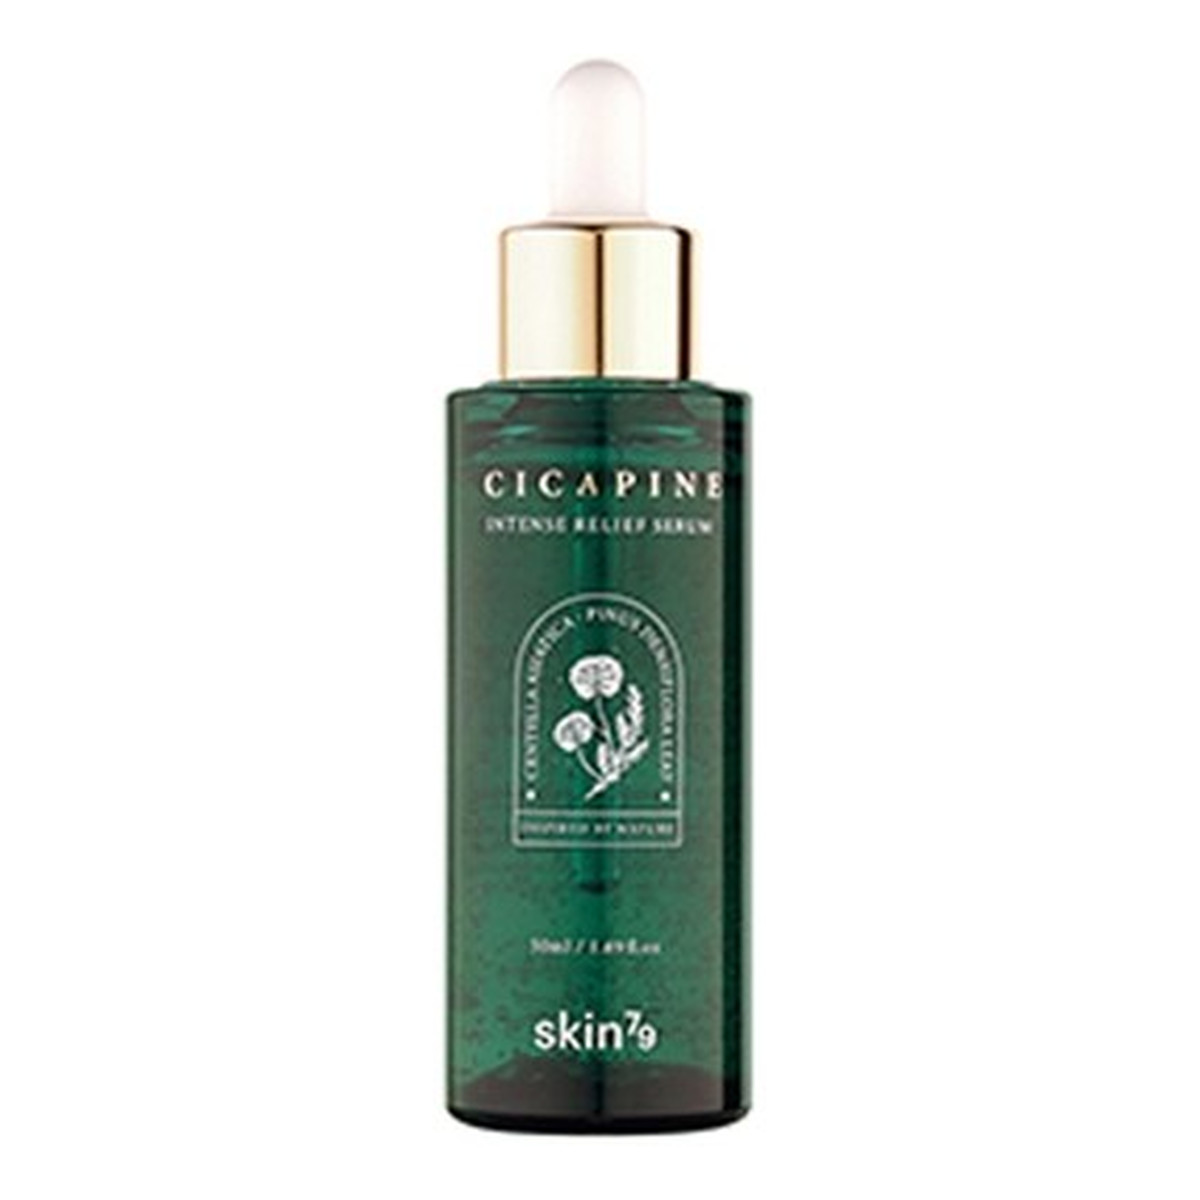 Skin79 Cica pine intense relief serum intensywnie regenerujące serum do twarzy 50ml